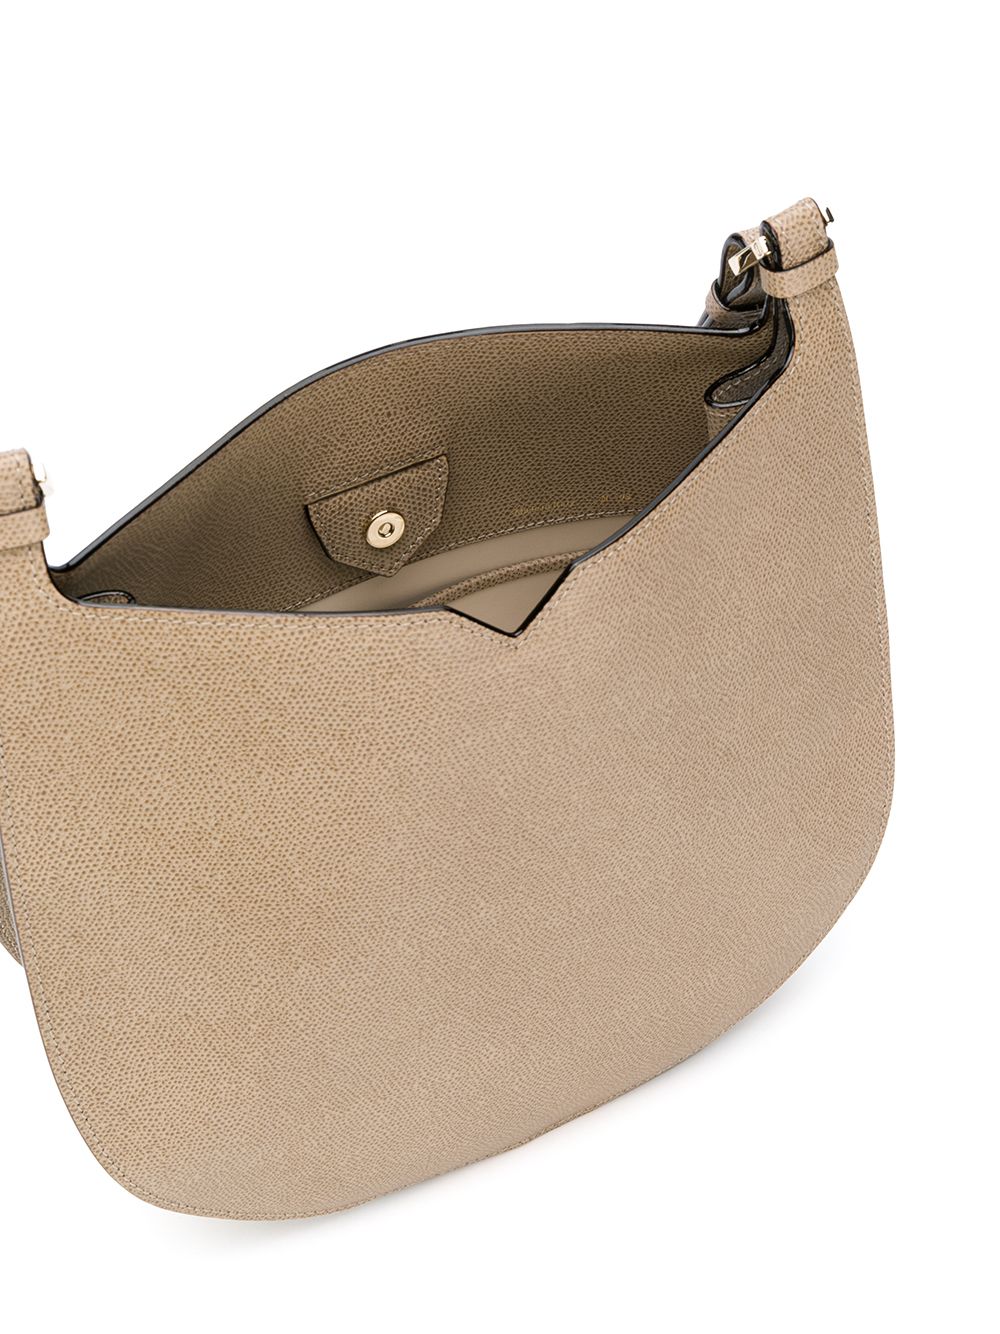 Valextra VALEXTRA- Leather Medium Hobo Bag